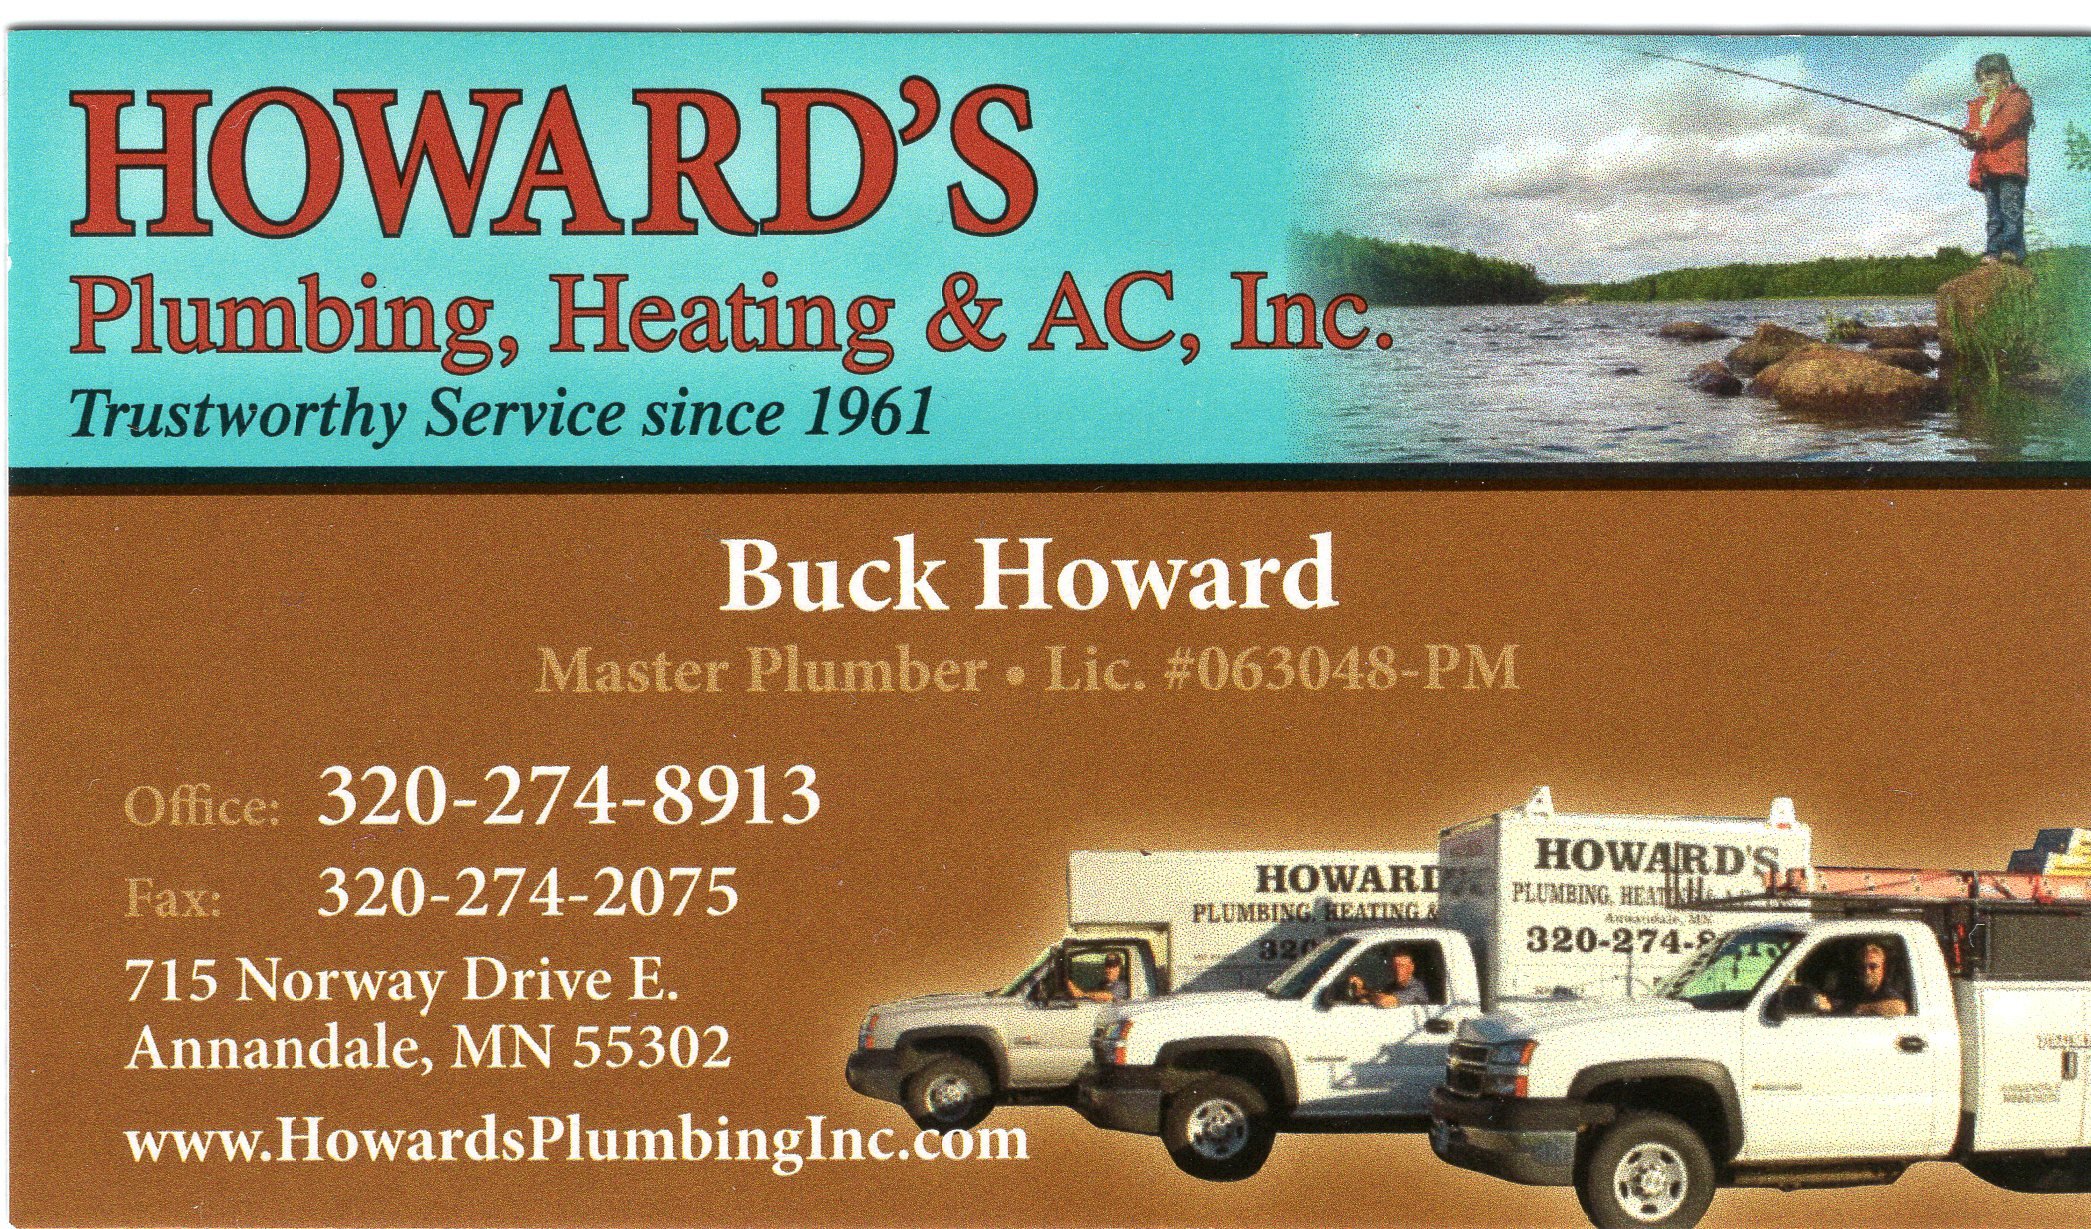 Howard's Plumbing ad.jpg